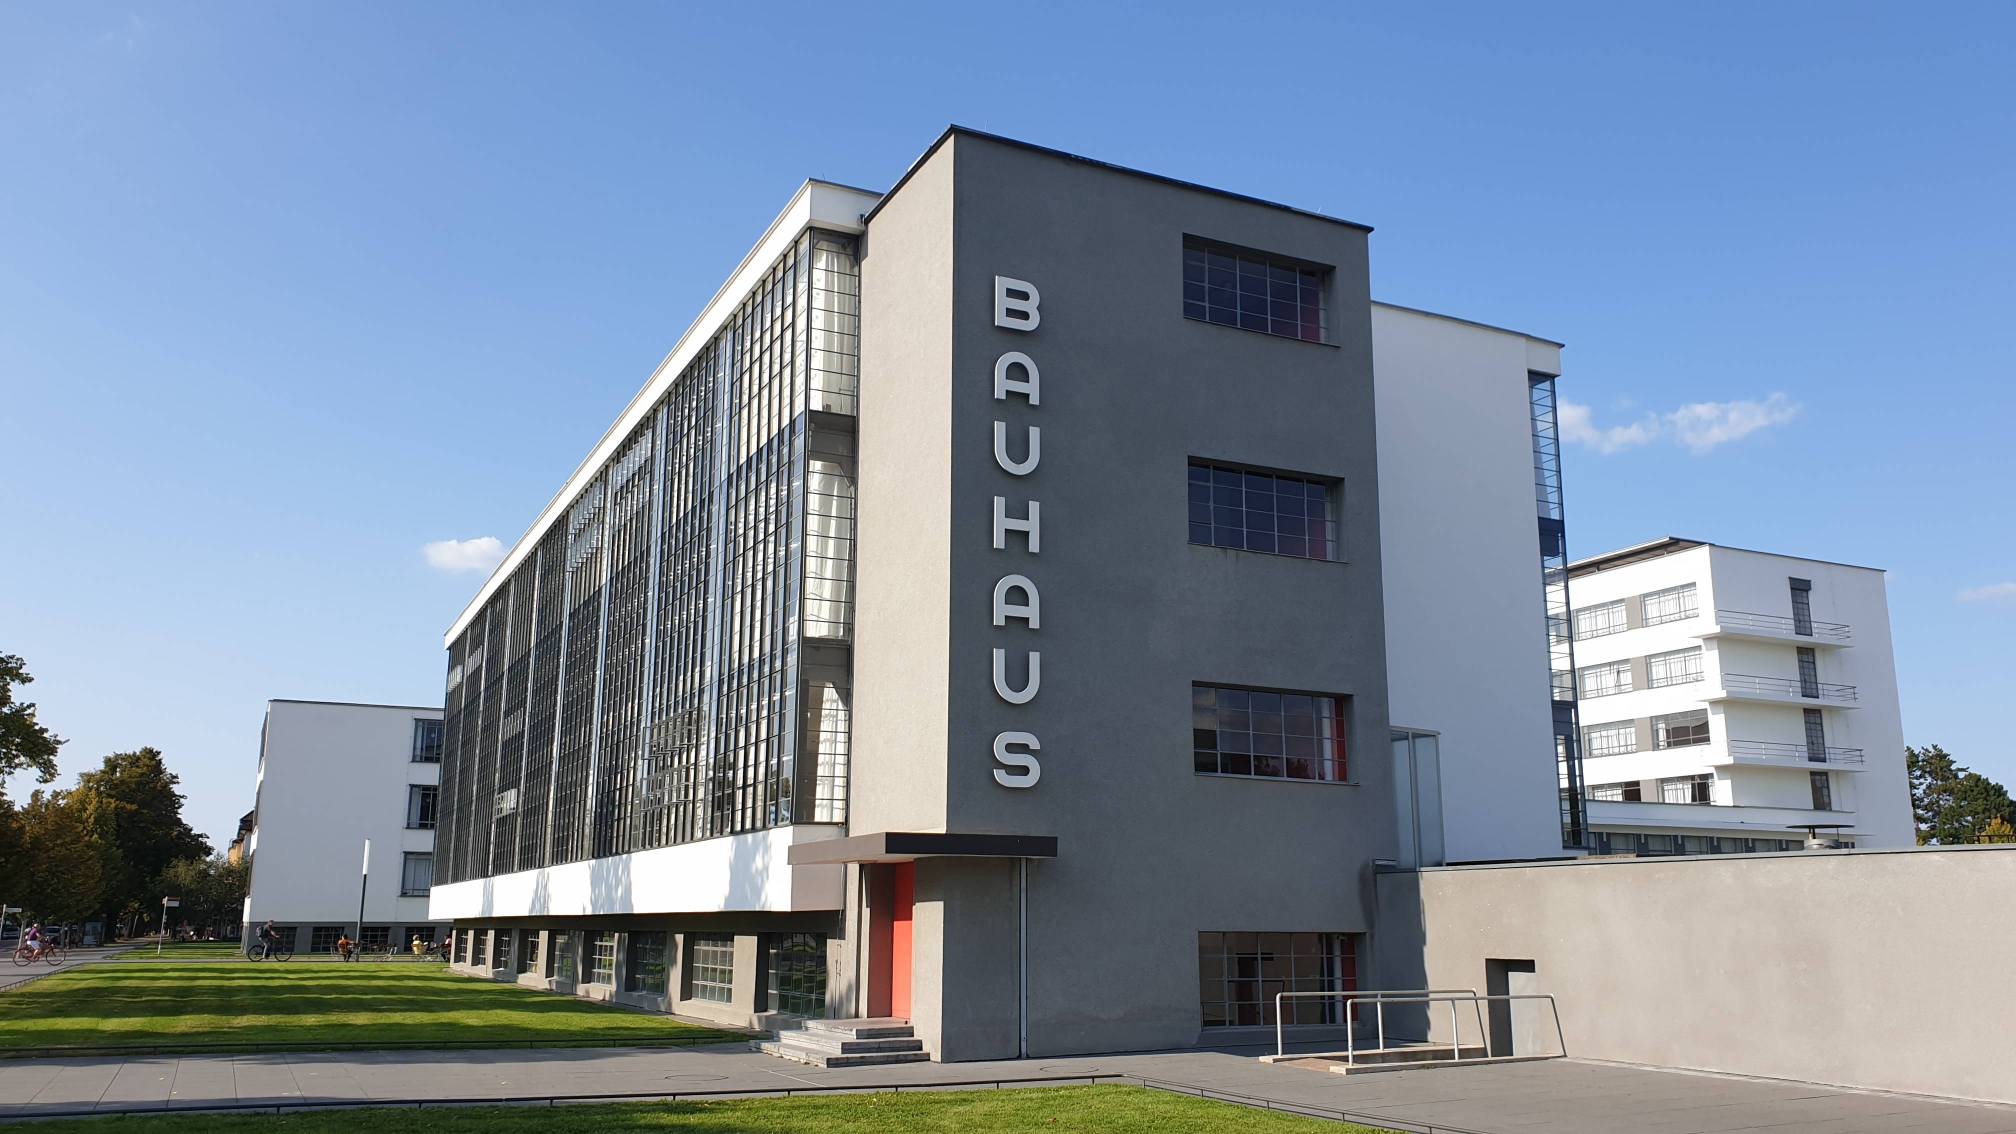 Bauhaus dessau